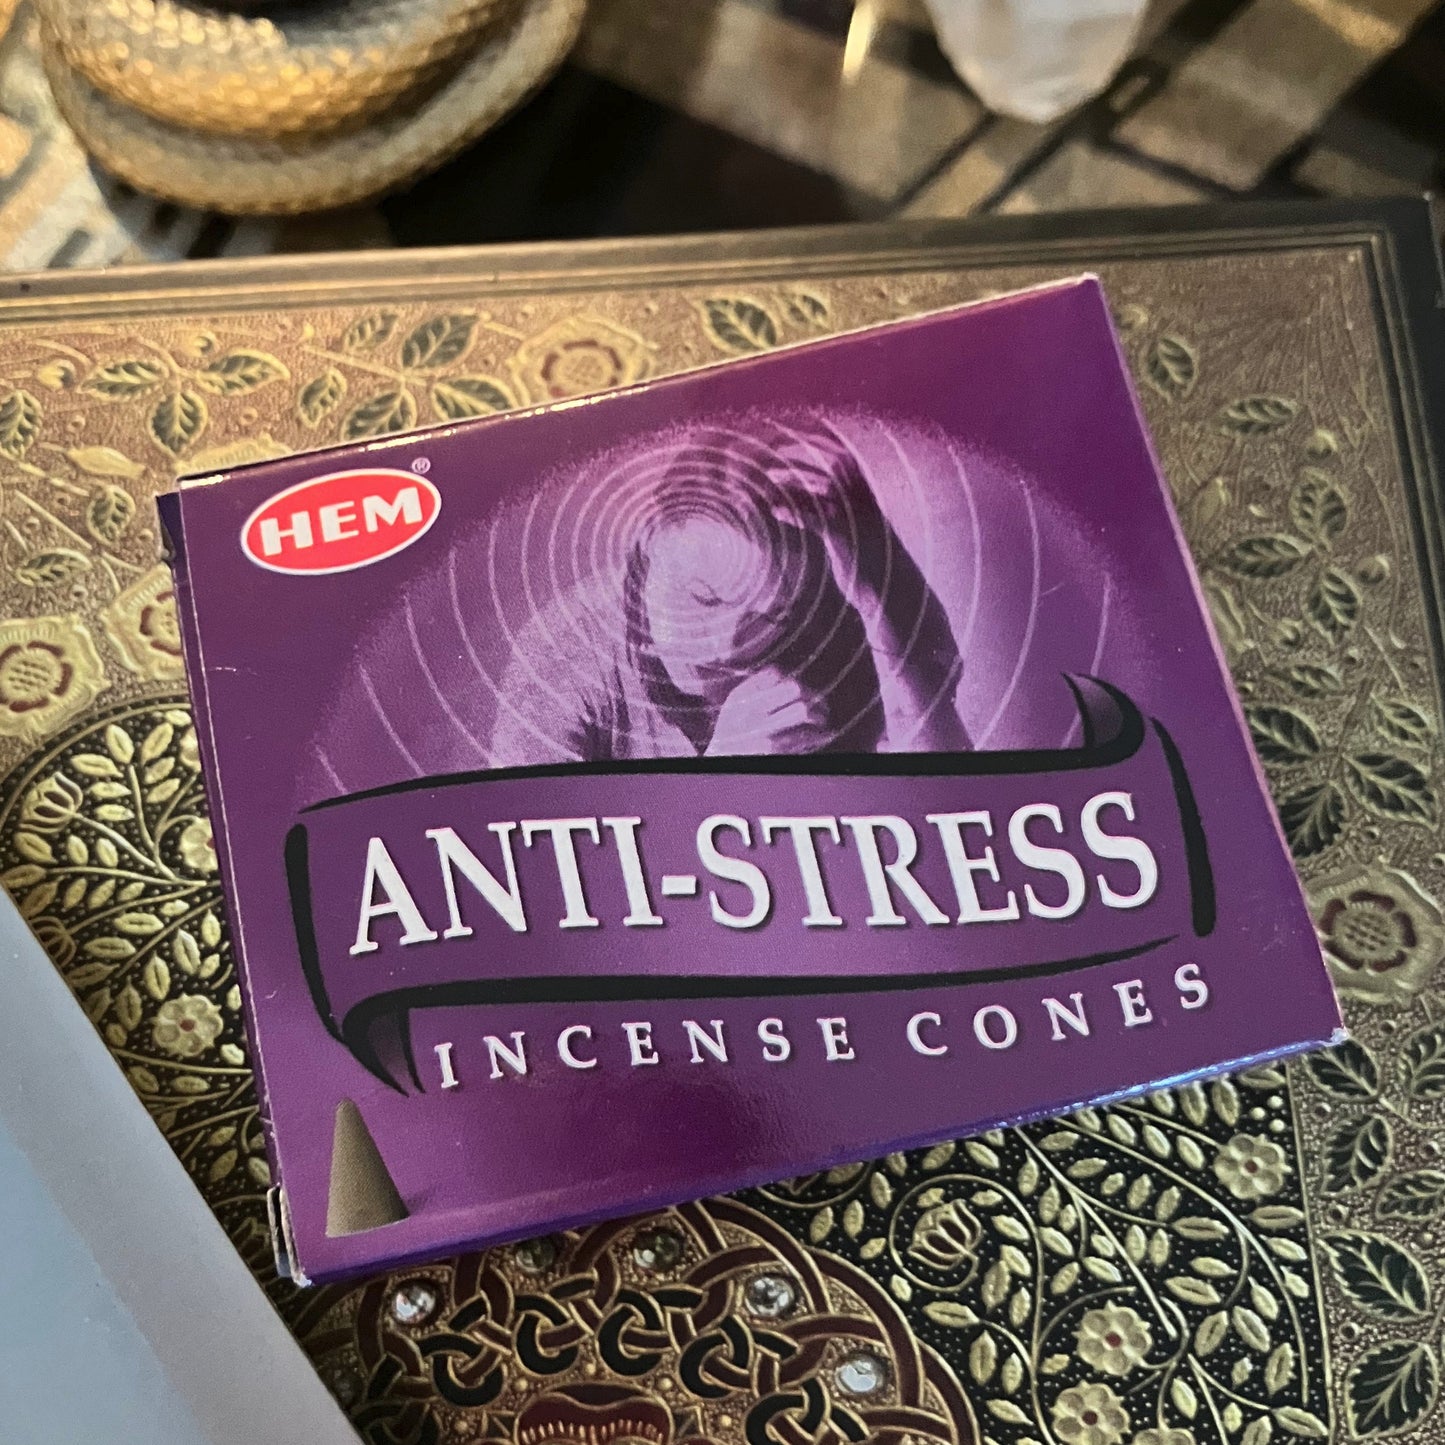 Anti-Stress Cone Incense 10 Cones by HEM